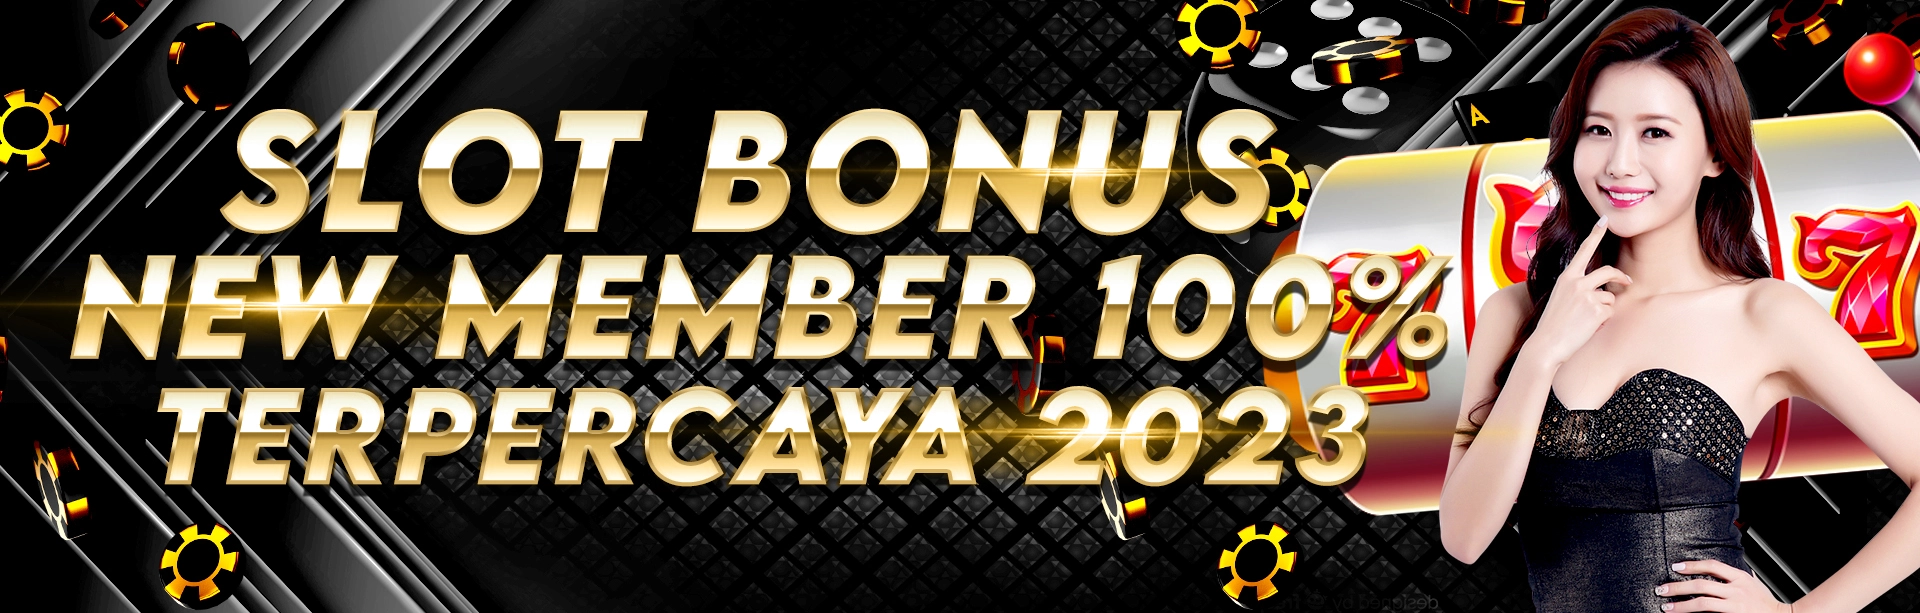 slot bonus new member 100 to 18x